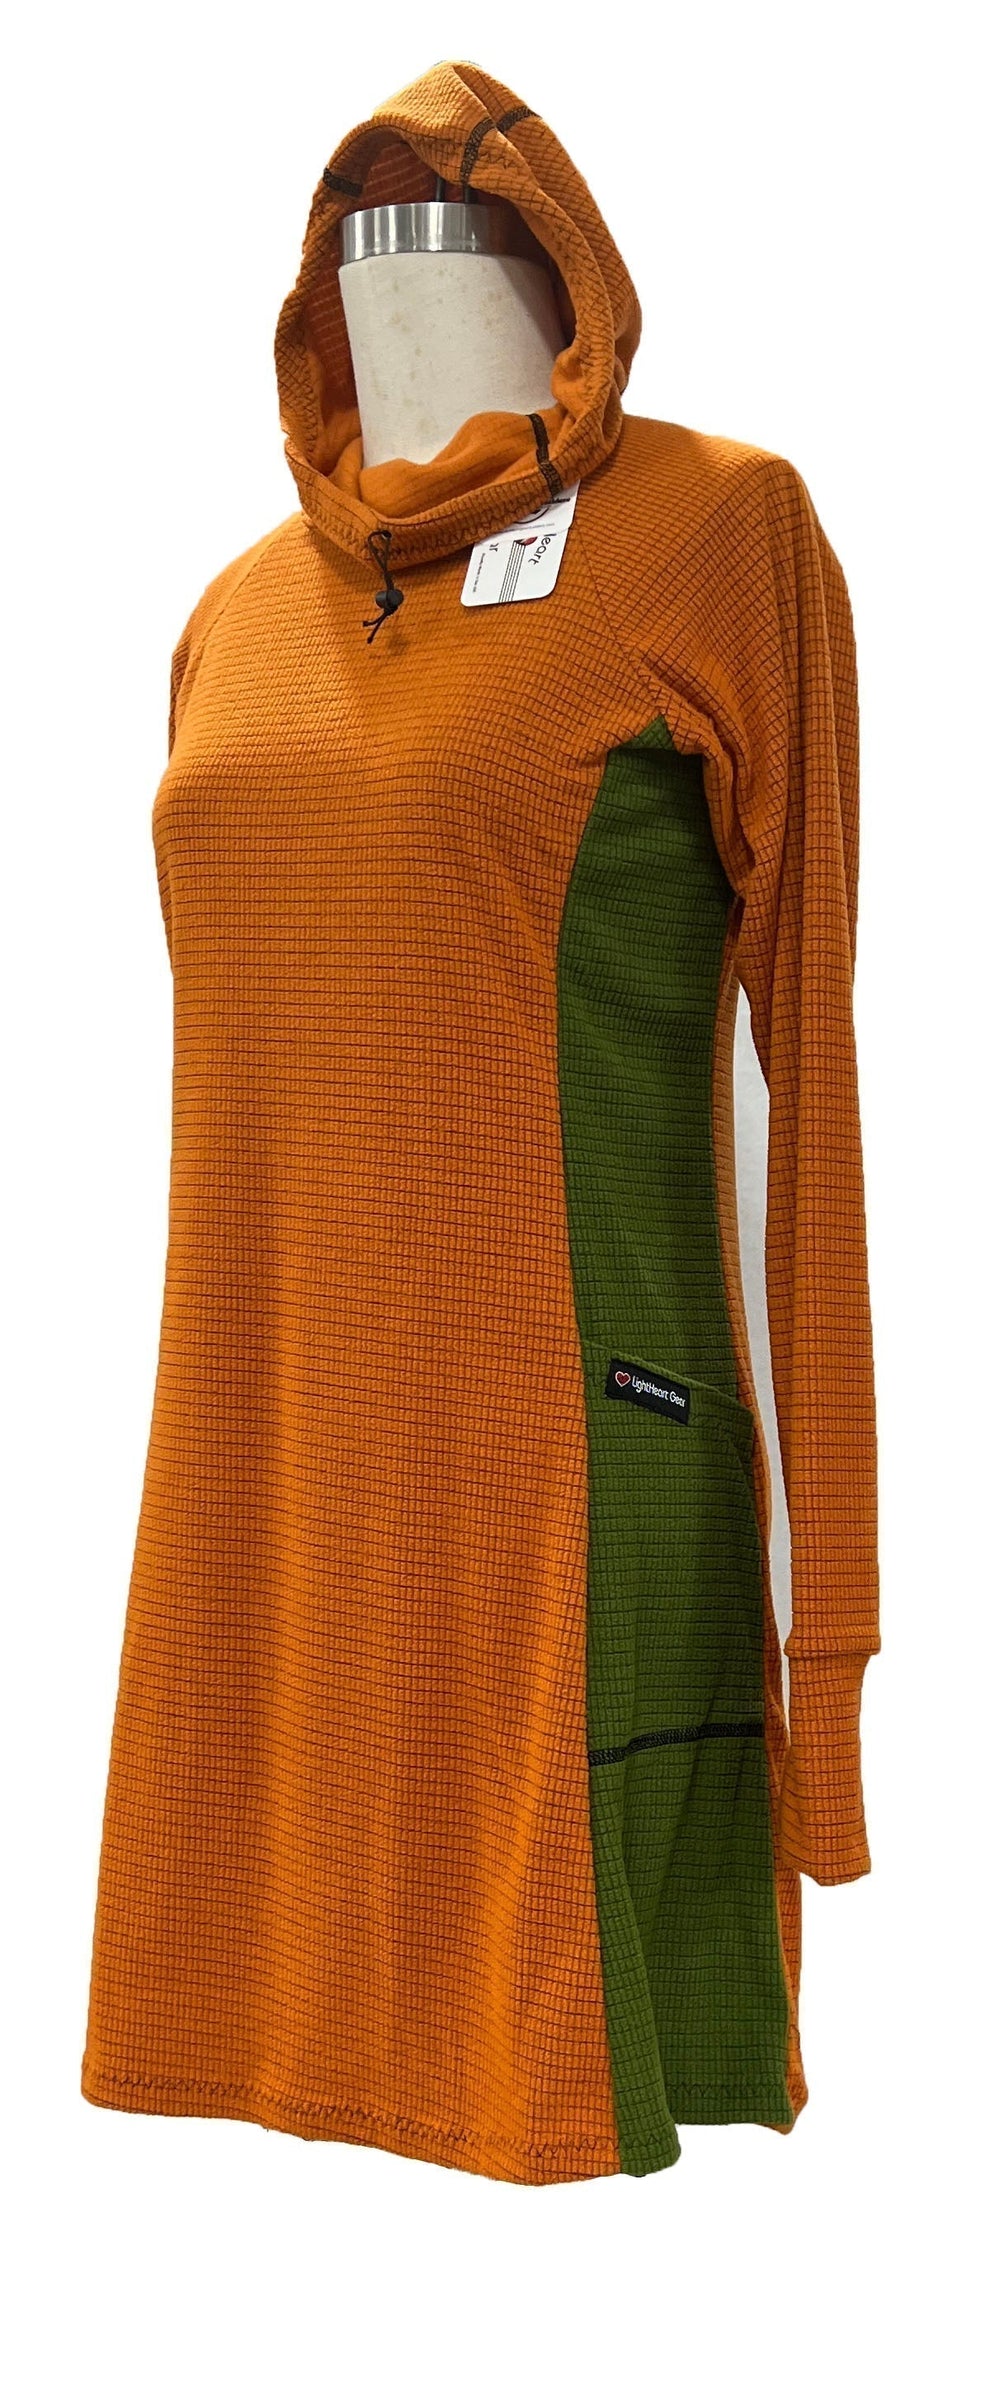 Fleece dress - Gray & Orange sides